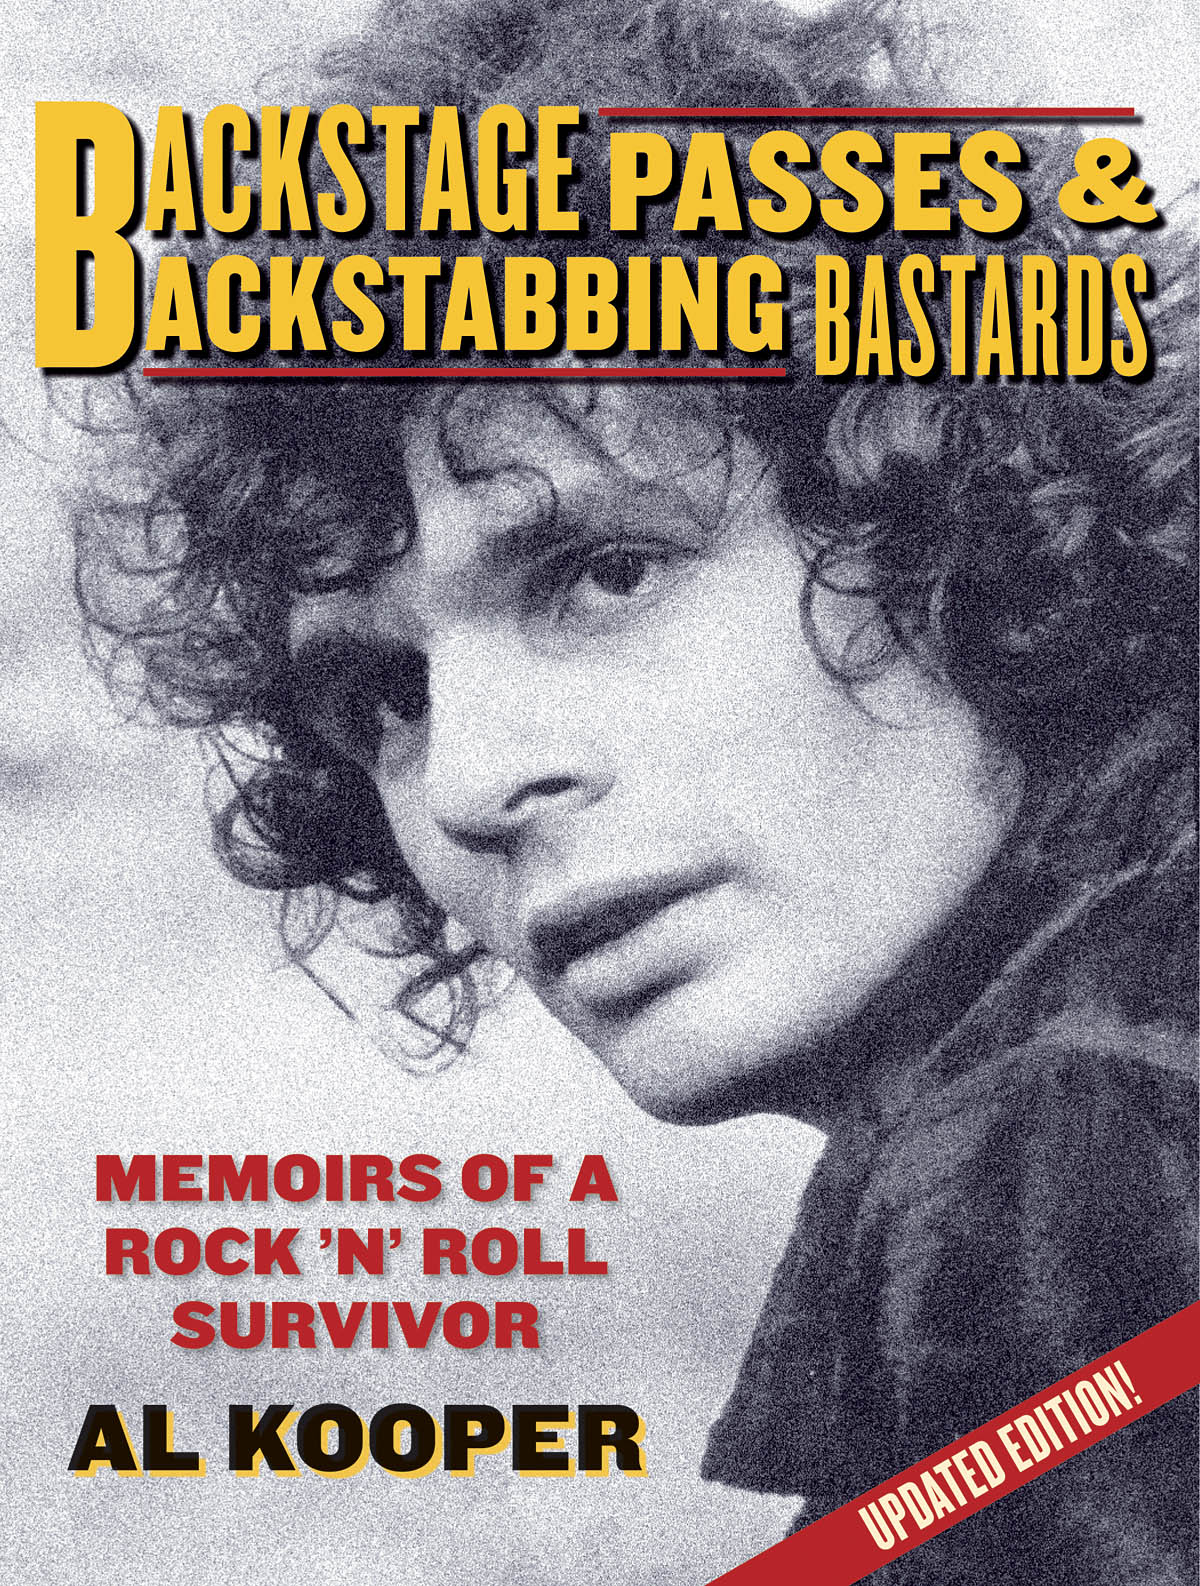 Backstage Passes & Backstabbing Bastards: Reference Books: Biography